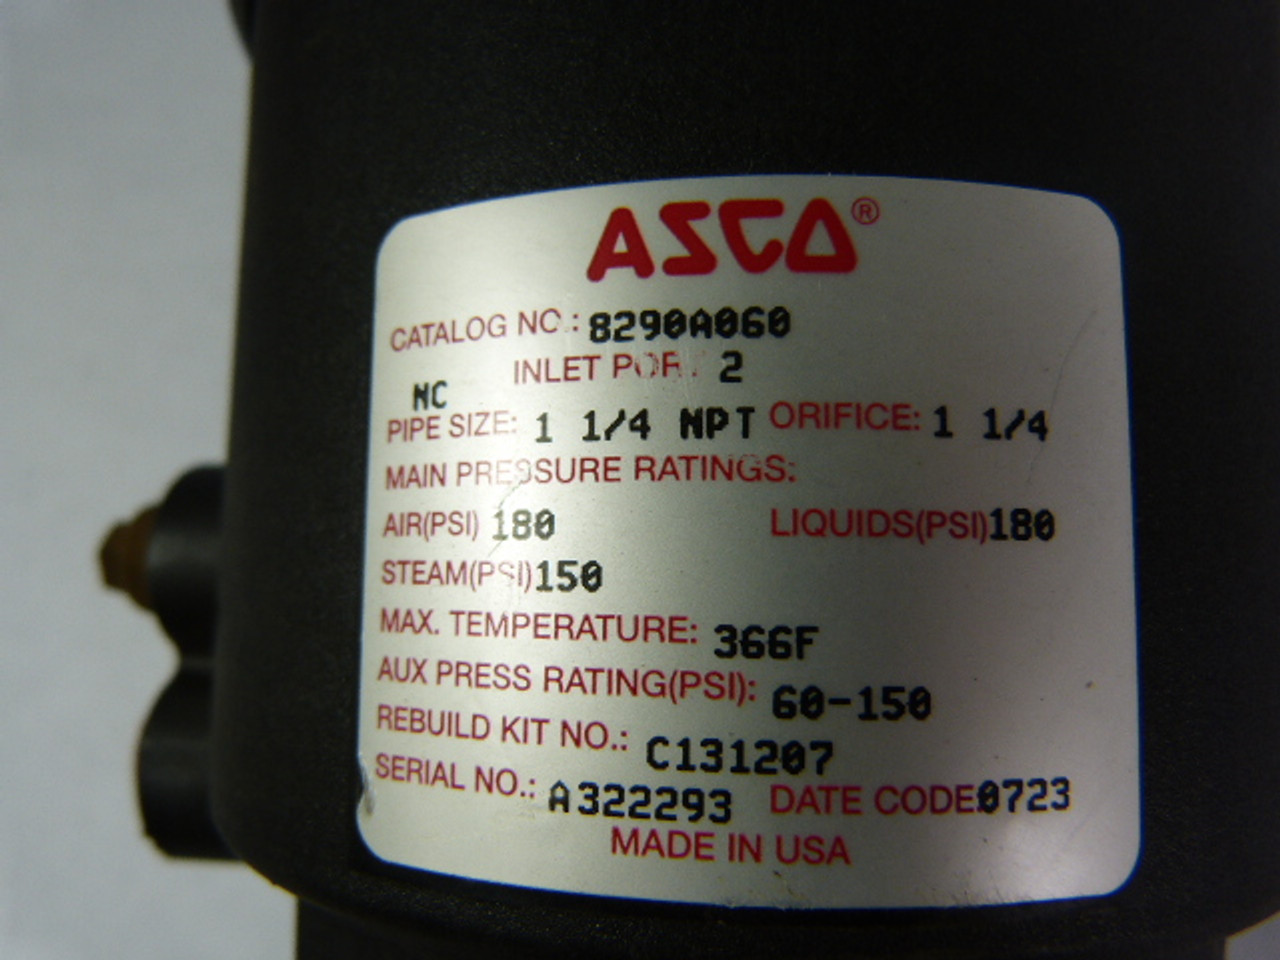 Asco 8290A060 Valve Inlet 2 Pipe Size 1 1/4" NPT ! NOP !